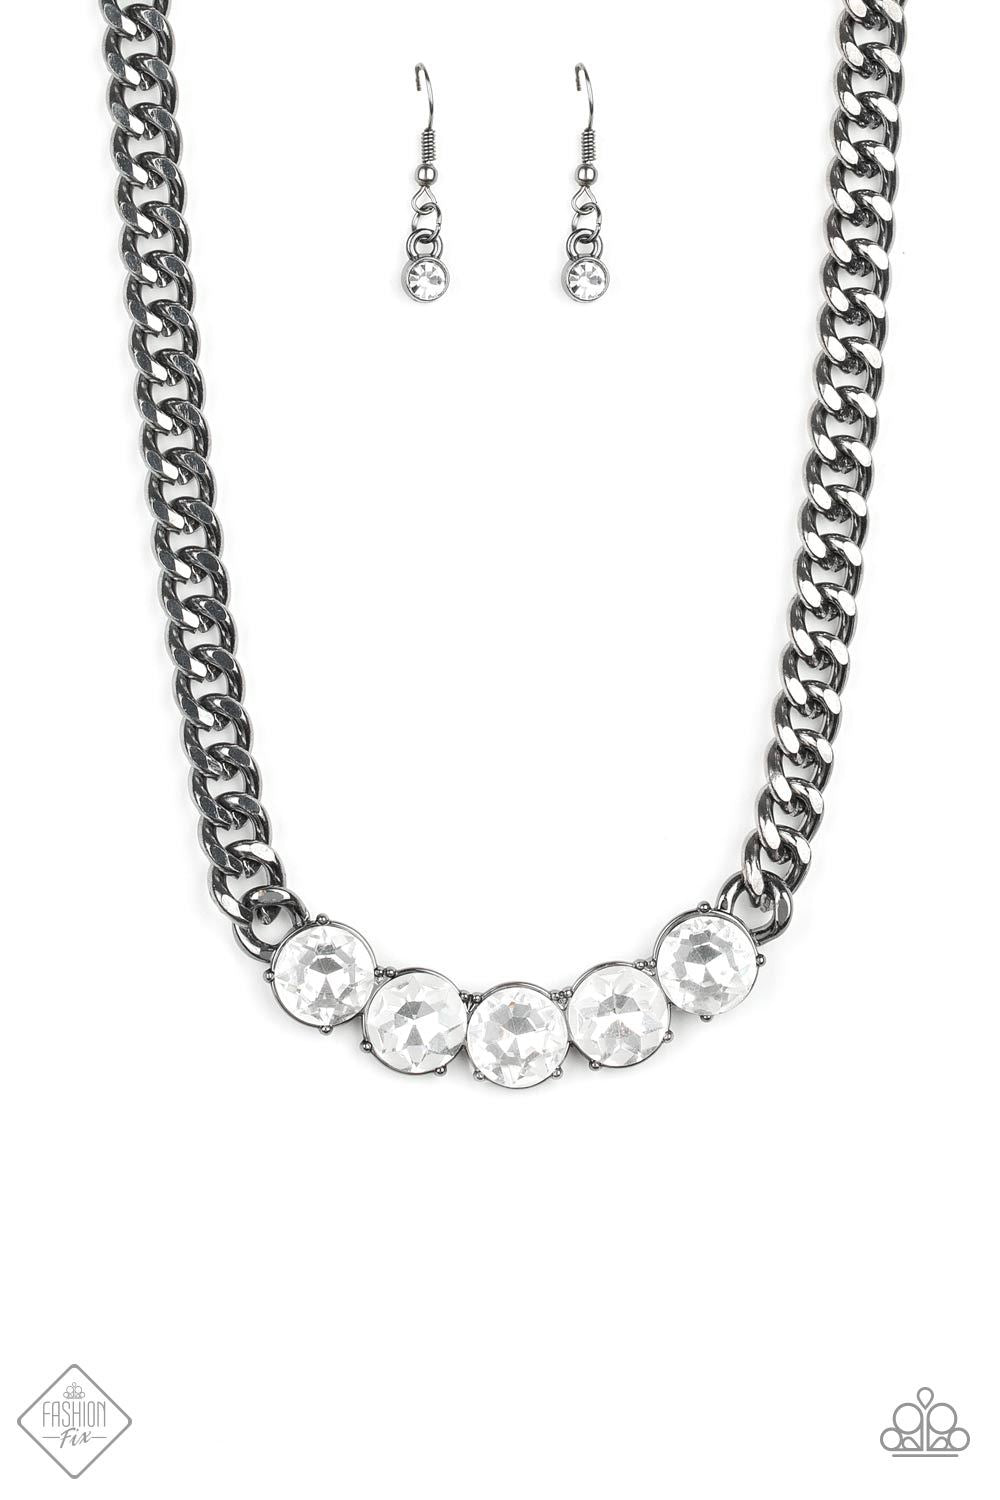 Rhinestone Renegade Gunmetal and White Rhinestone Necklace - Paparazzi Accessories-CarasShop.com - $5 Jewelry by Cara Jewels